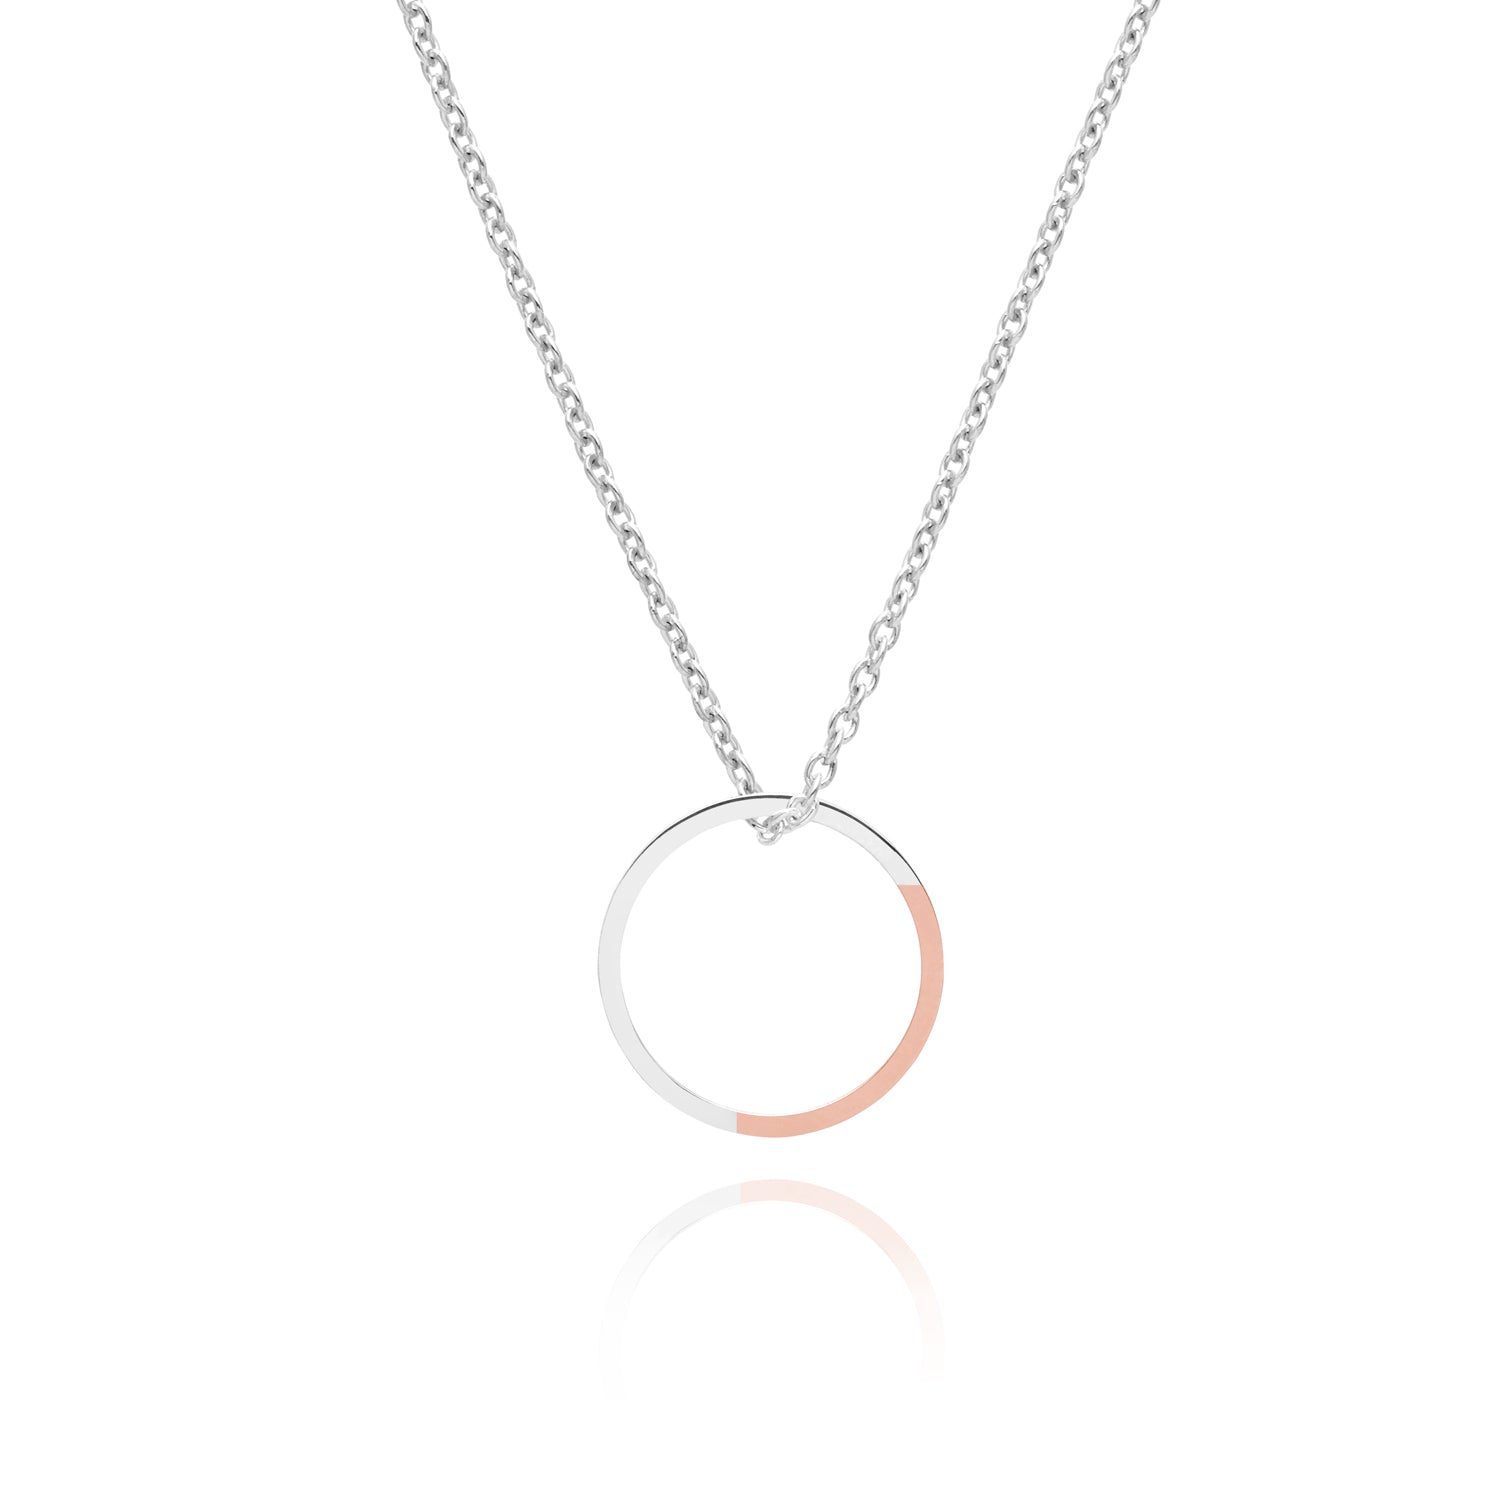 Golden Ratio Circle Necklace - 9k Rose Gold & Silver